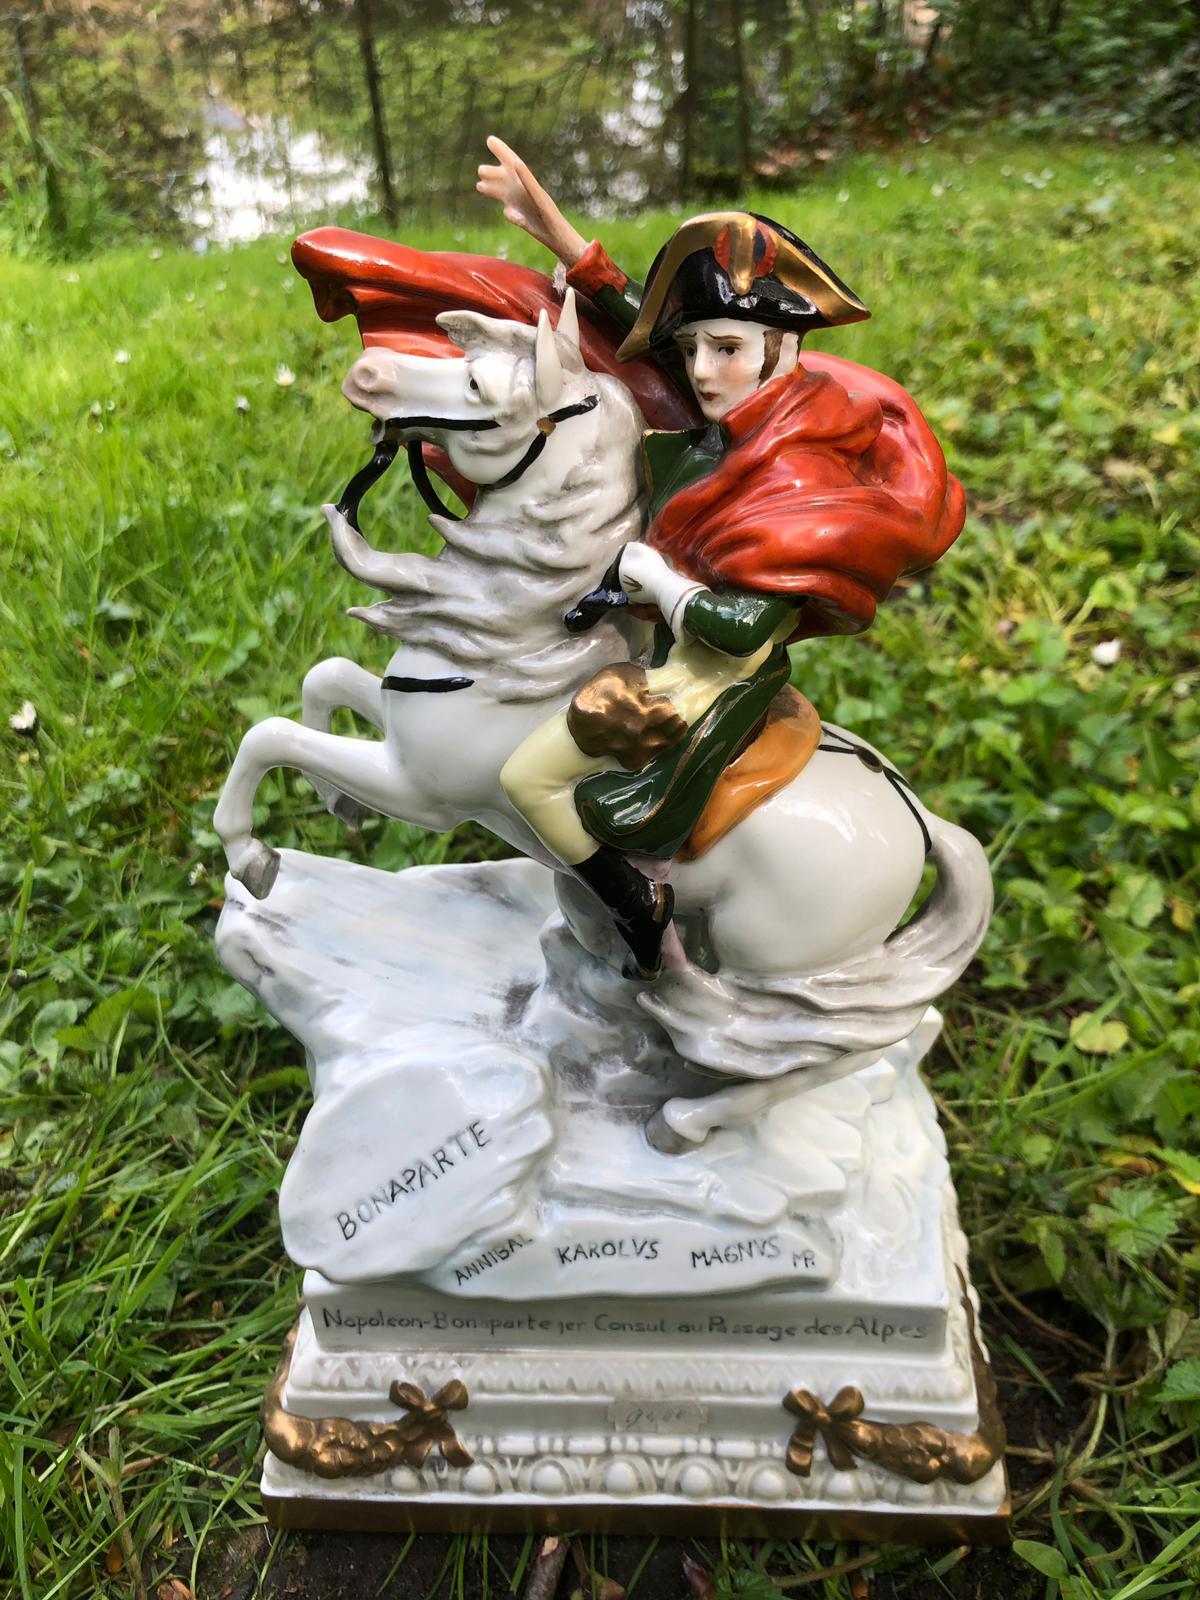 20th Century House Scheibe Alsbach Porcelain Figure, Napoleon Bonaparte on Horse, 1989 For Sale